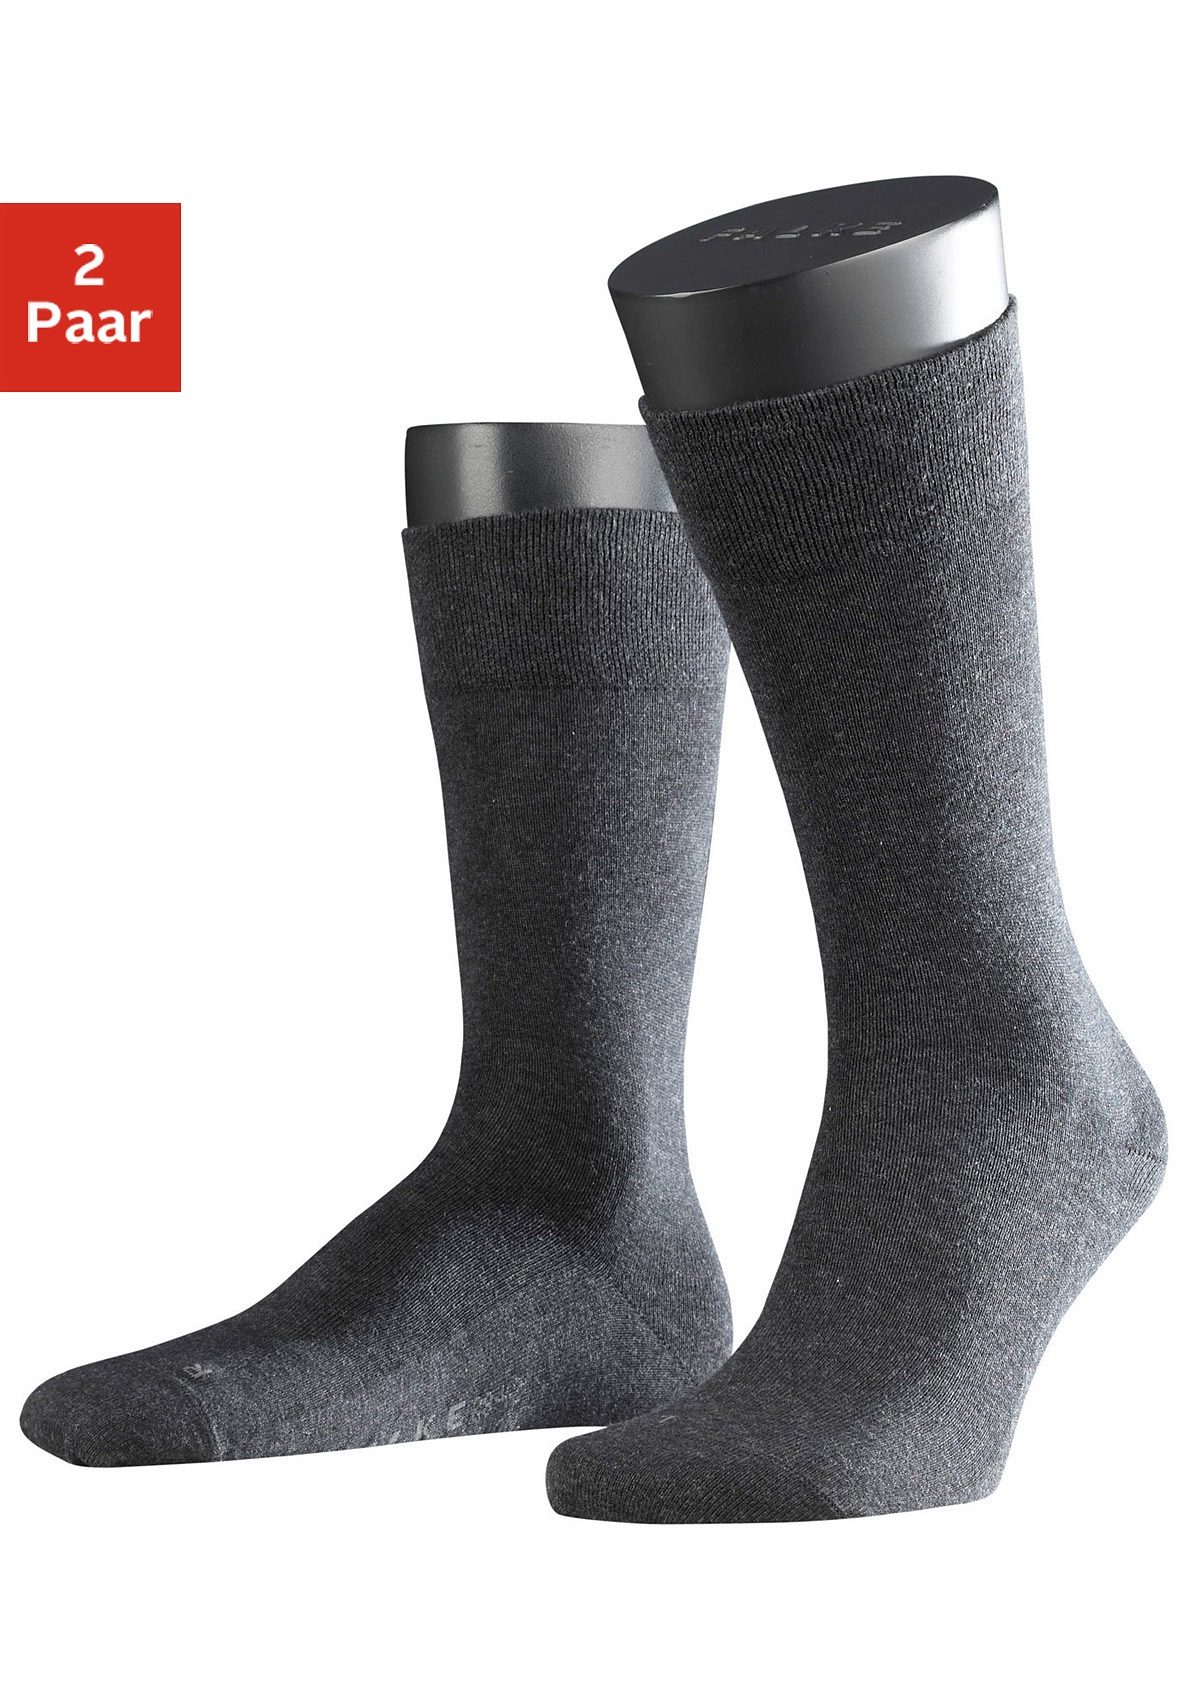 FALKE Socken »Sensitive London« (2-Paar) mit sensitve Bündchen ohne Gummi  online kaufen | OTTO